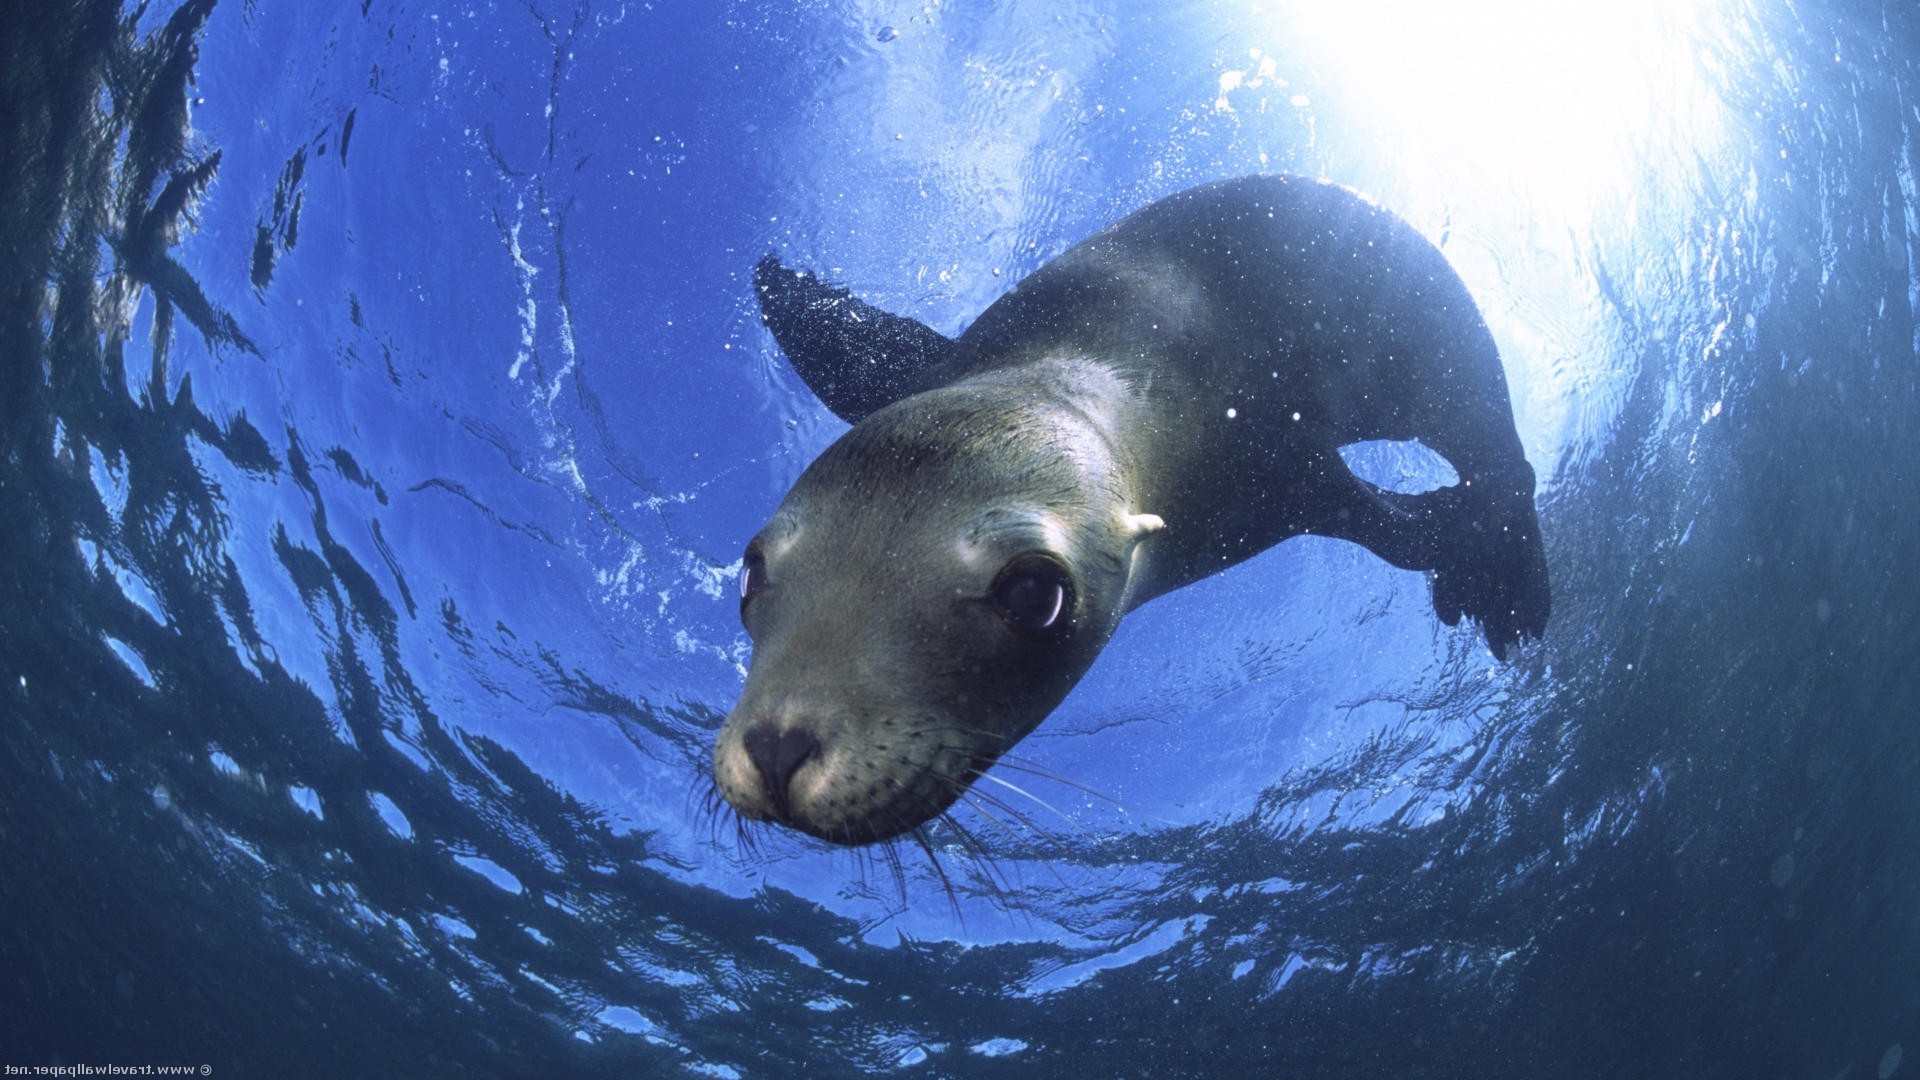 animals underwater water ocean sea marine swimming fish wildlife aquatic one